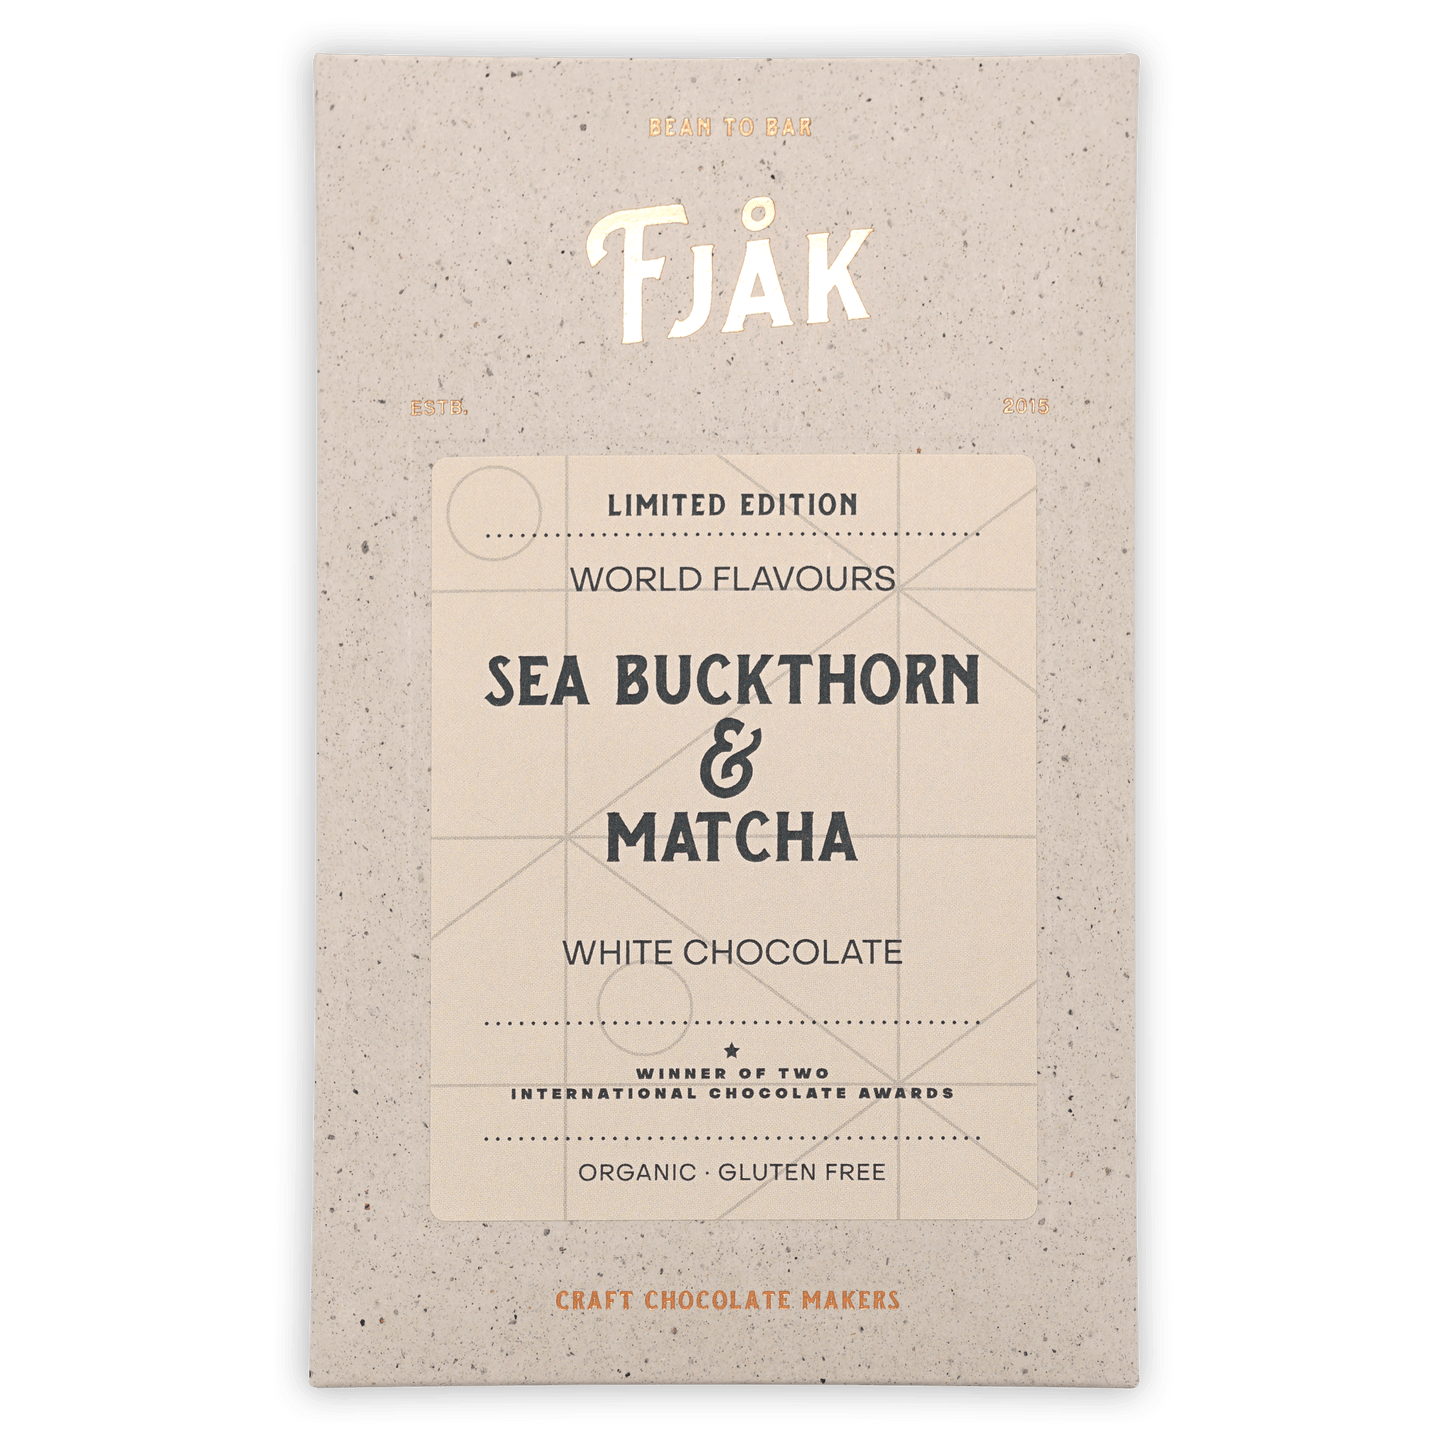 Fjåk Sea Buckthorn & Matcha White Chocolate (Limited Edition)